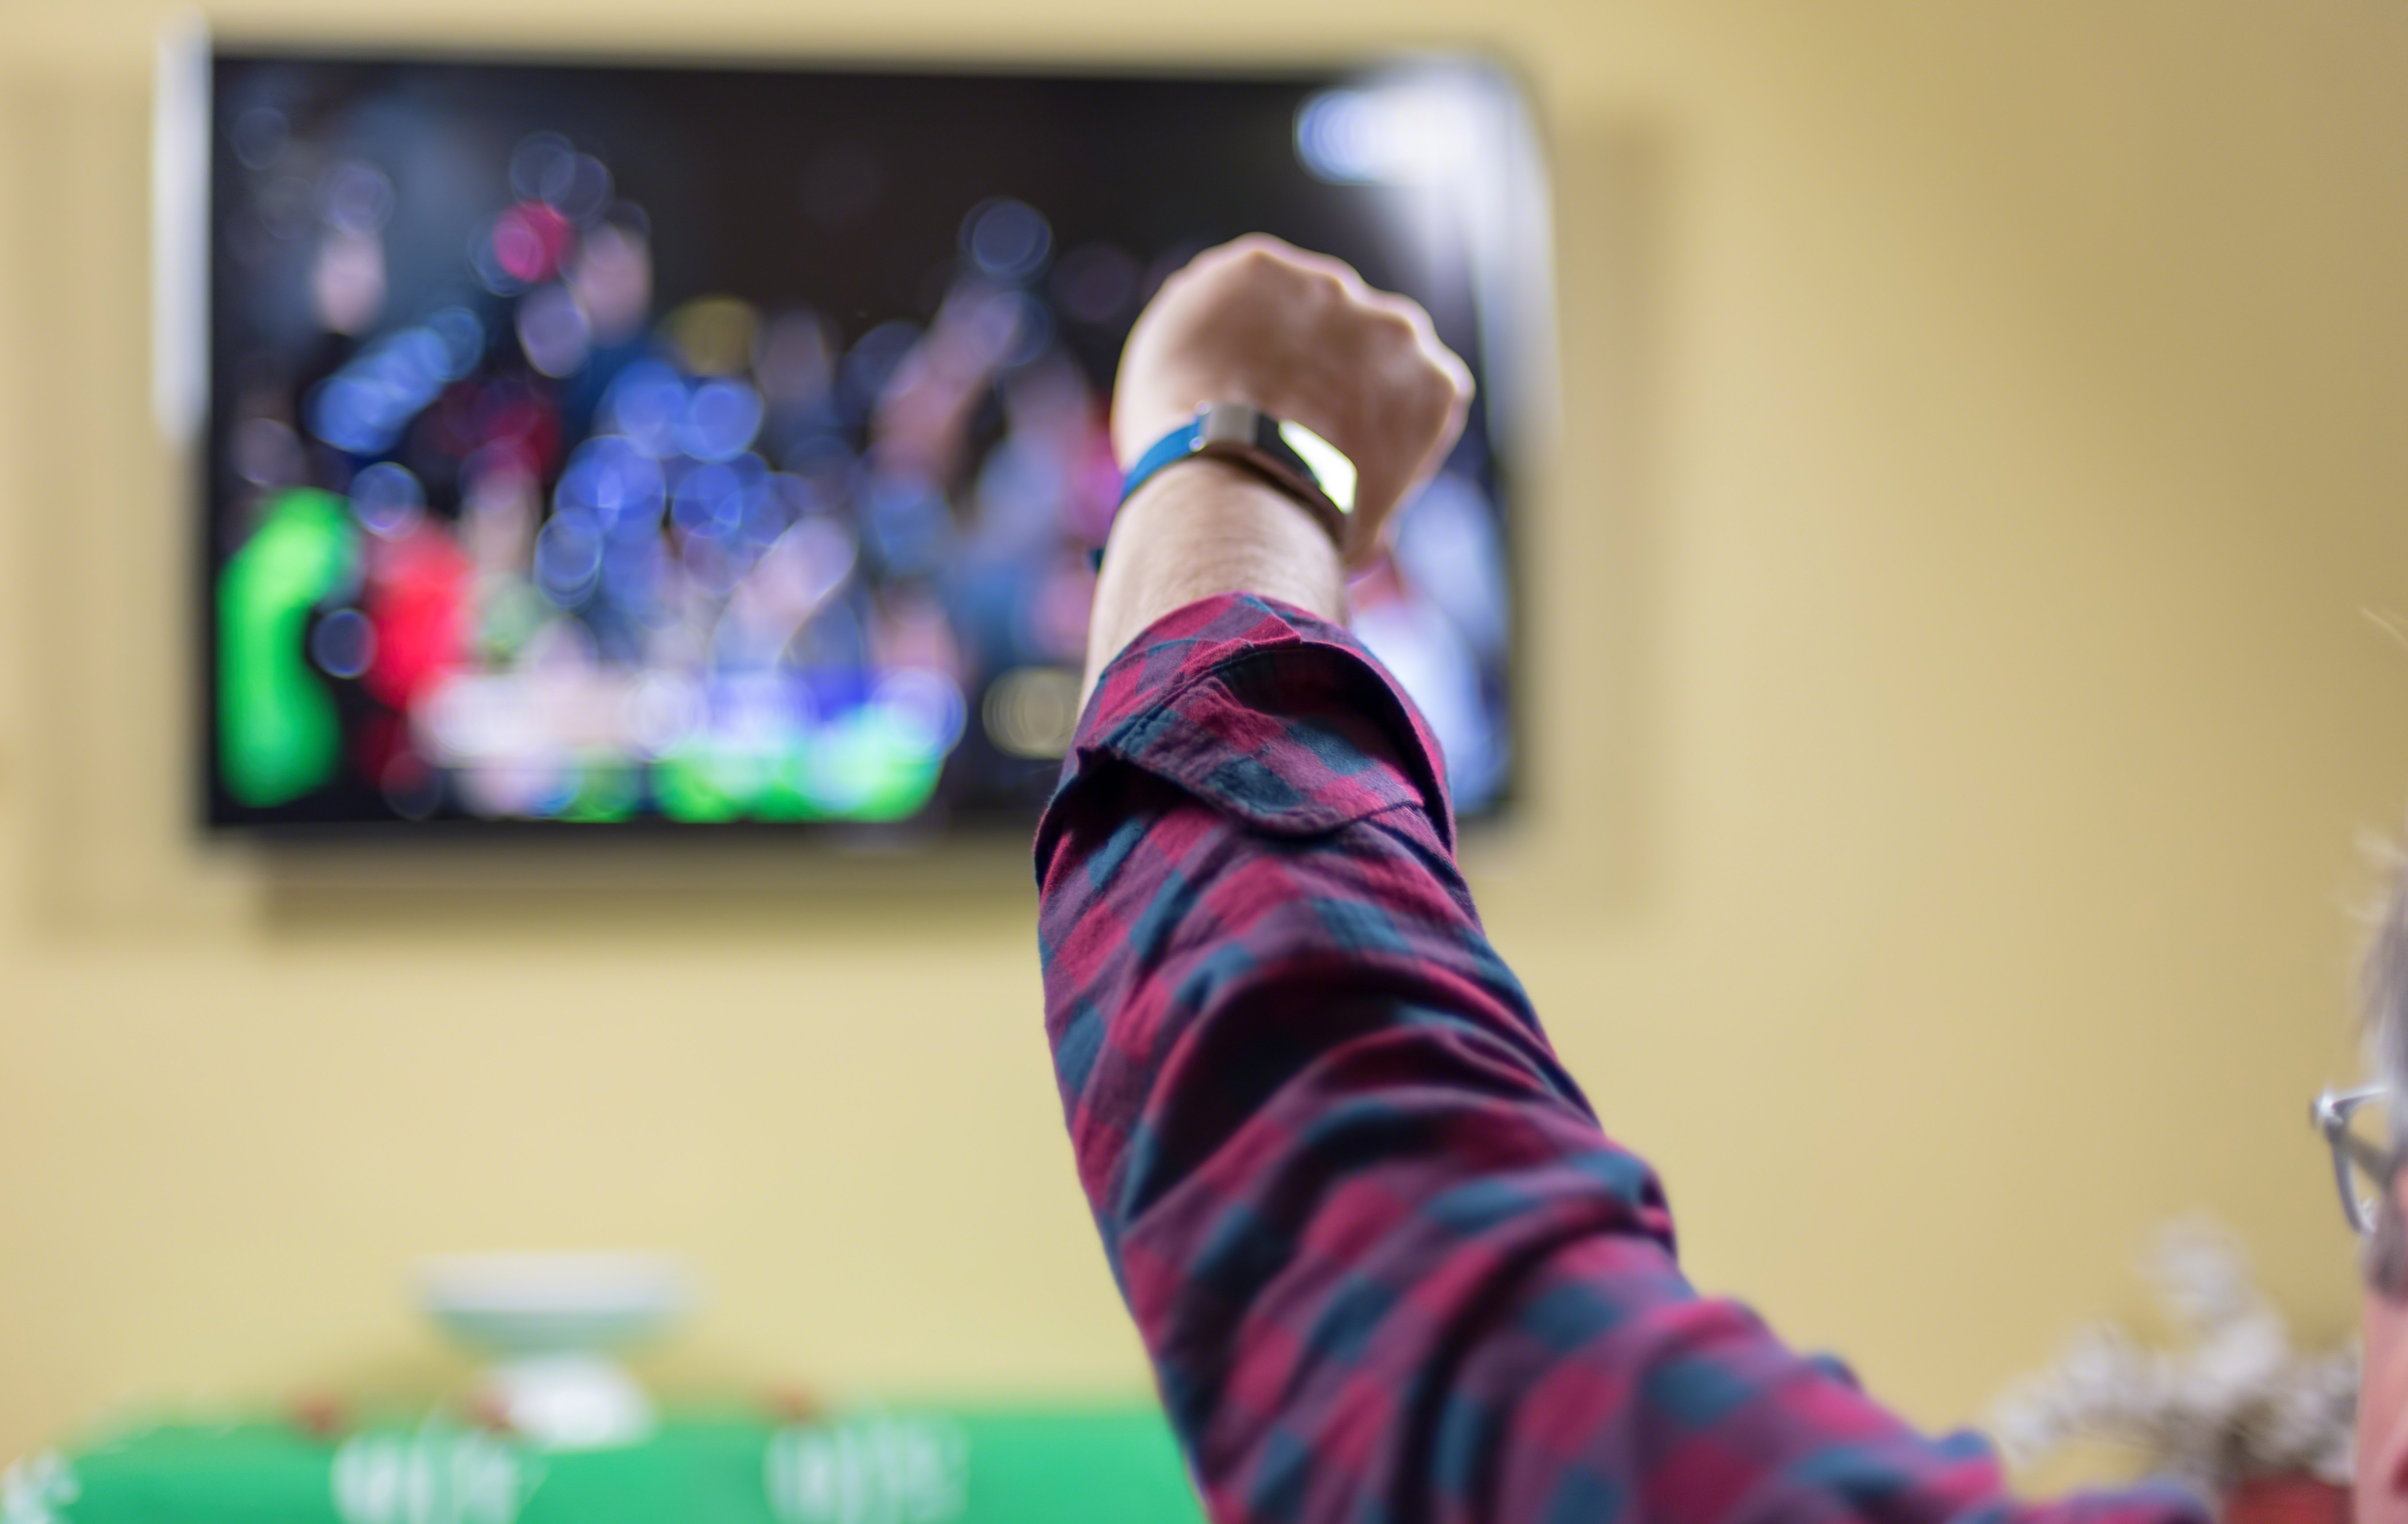 man-watching-sports-on-tv-cheering-for-team-2021-08-30-11-13-10-utc